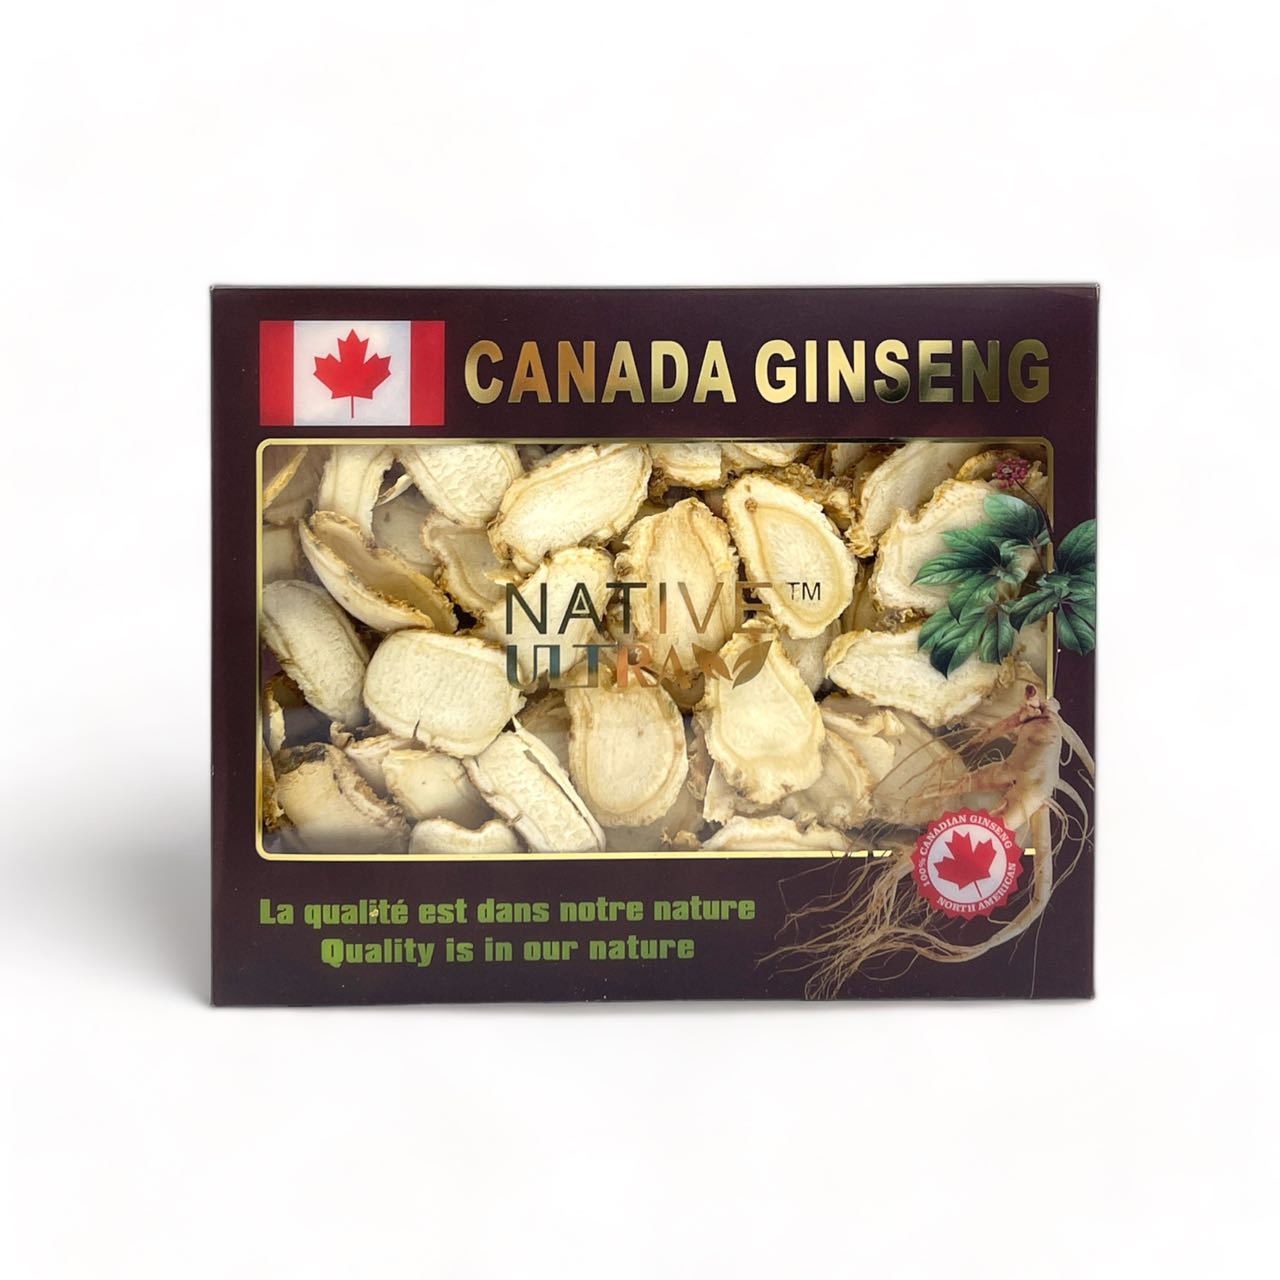 "NATIVE ULTRA" Tranches de Ginseng Canadien, 80g/boîte